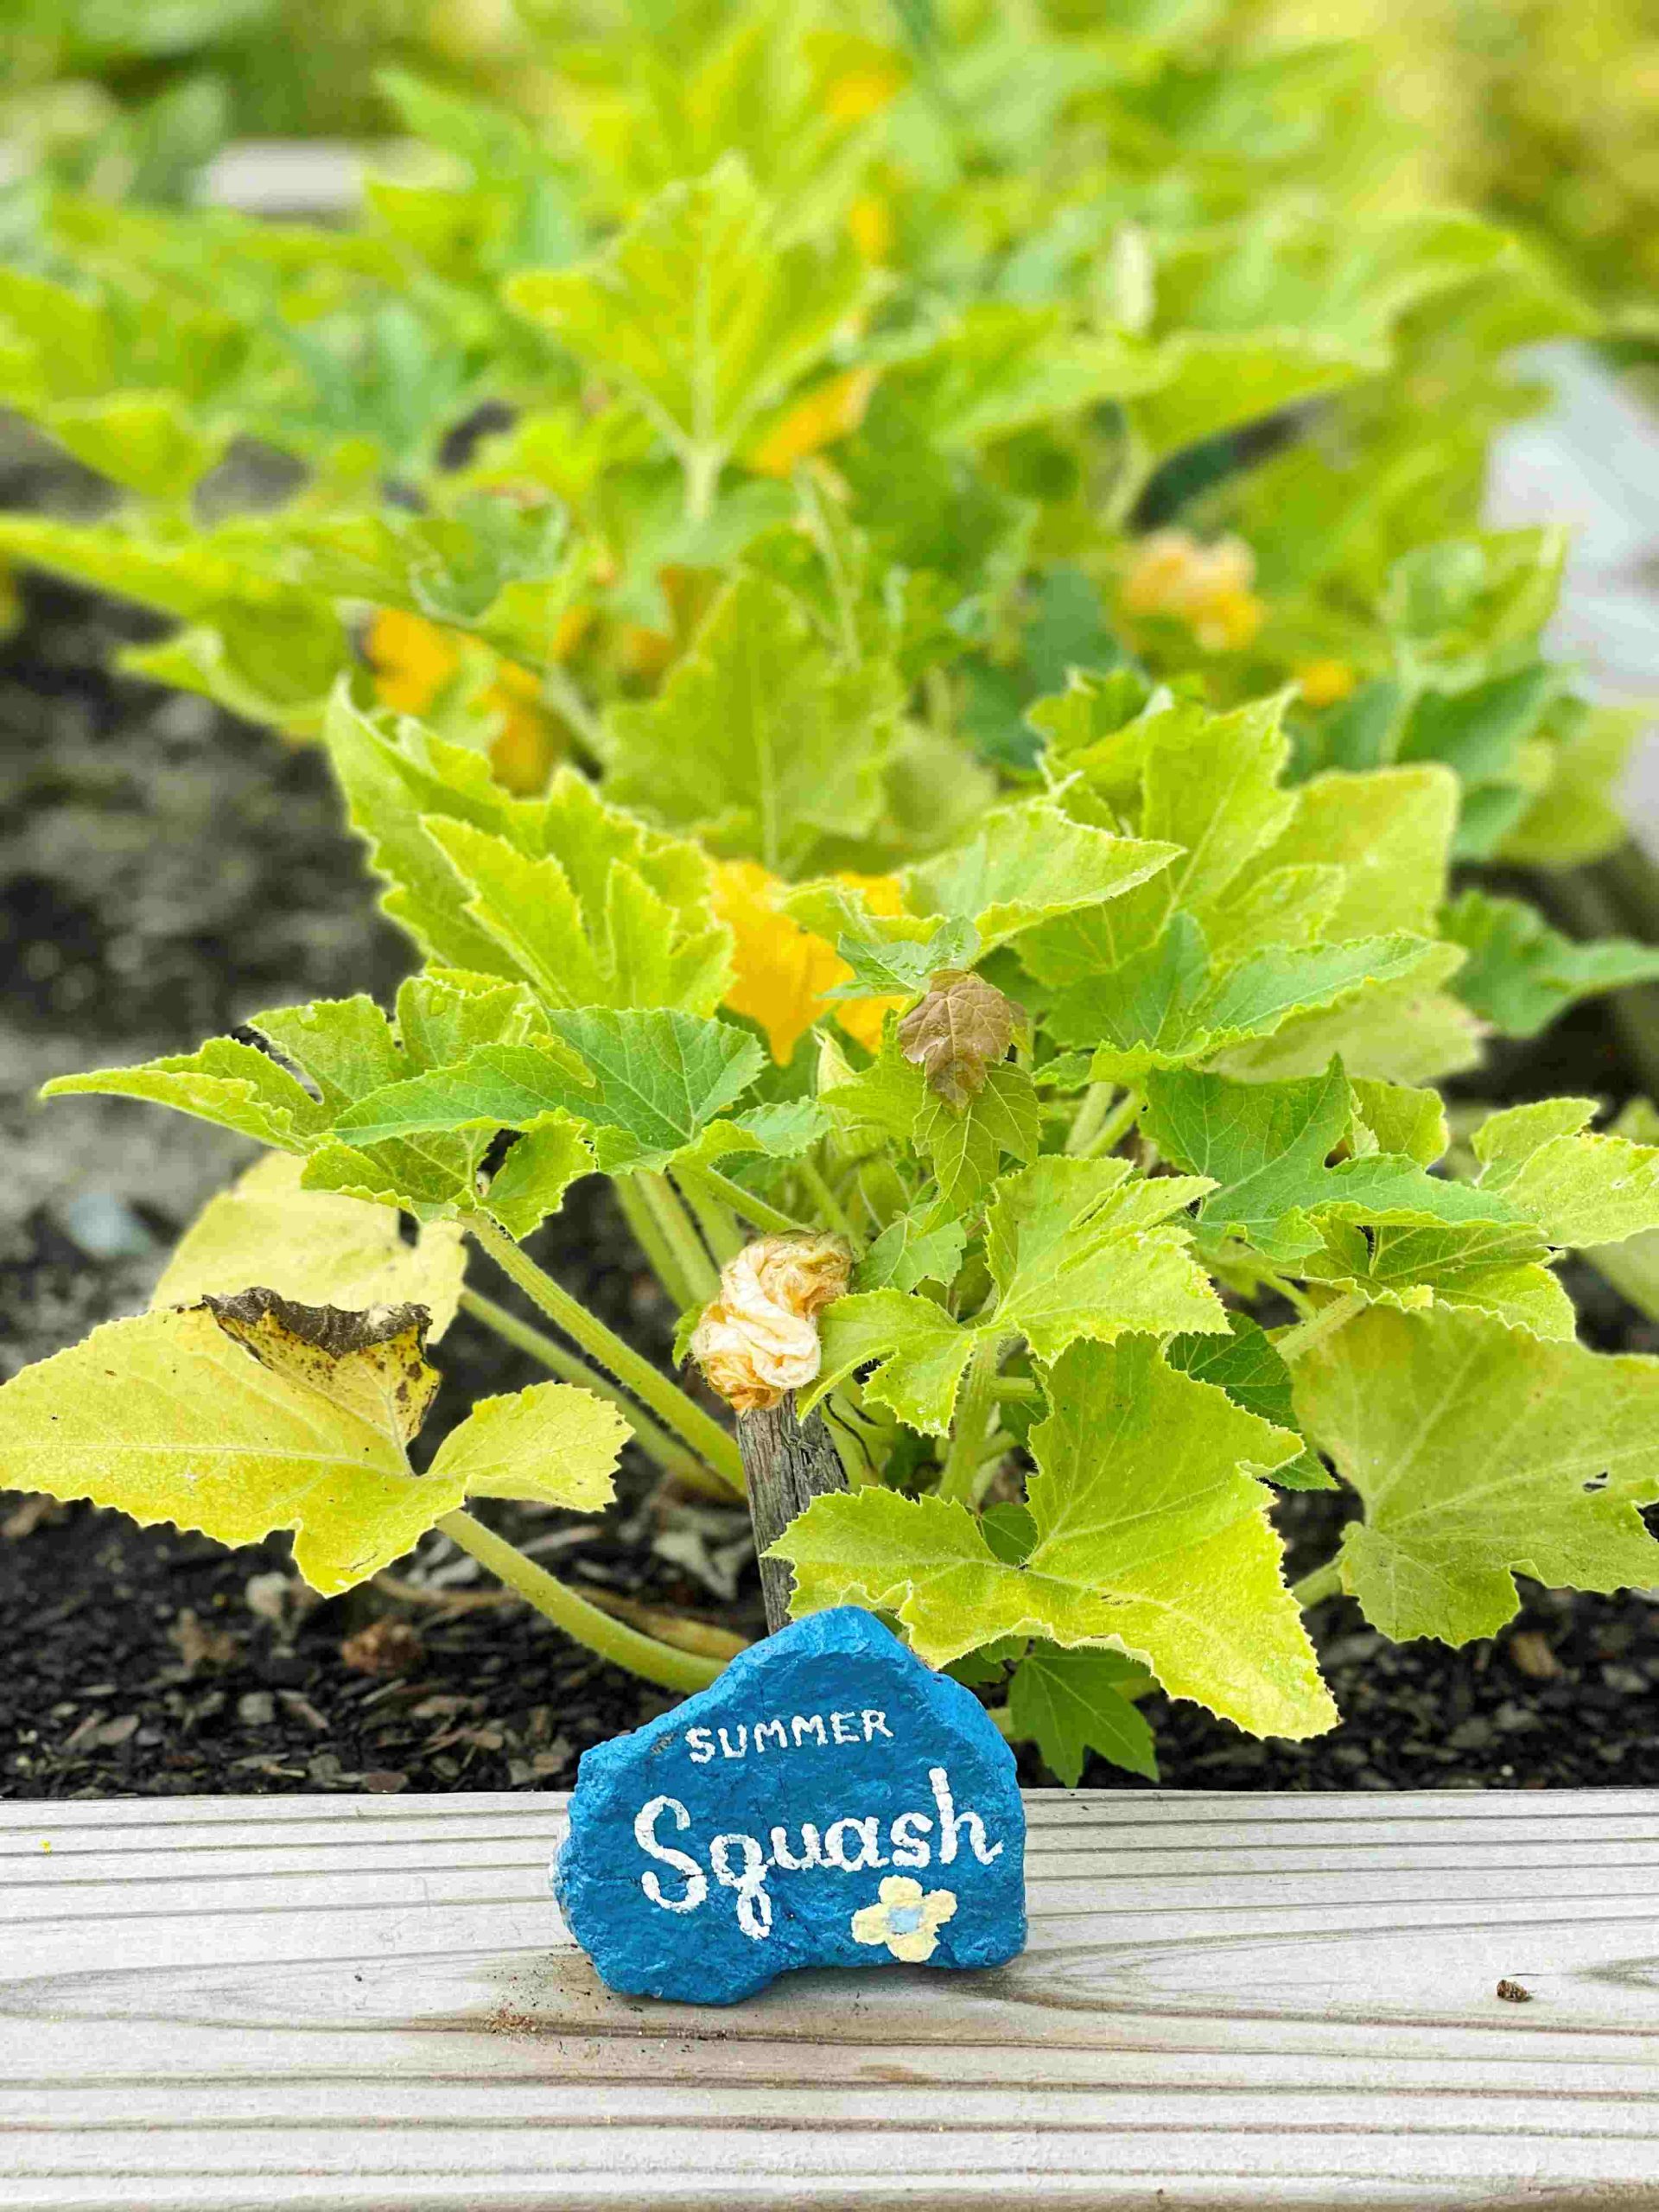 gardening tips for senior - Summer-squash-scaled